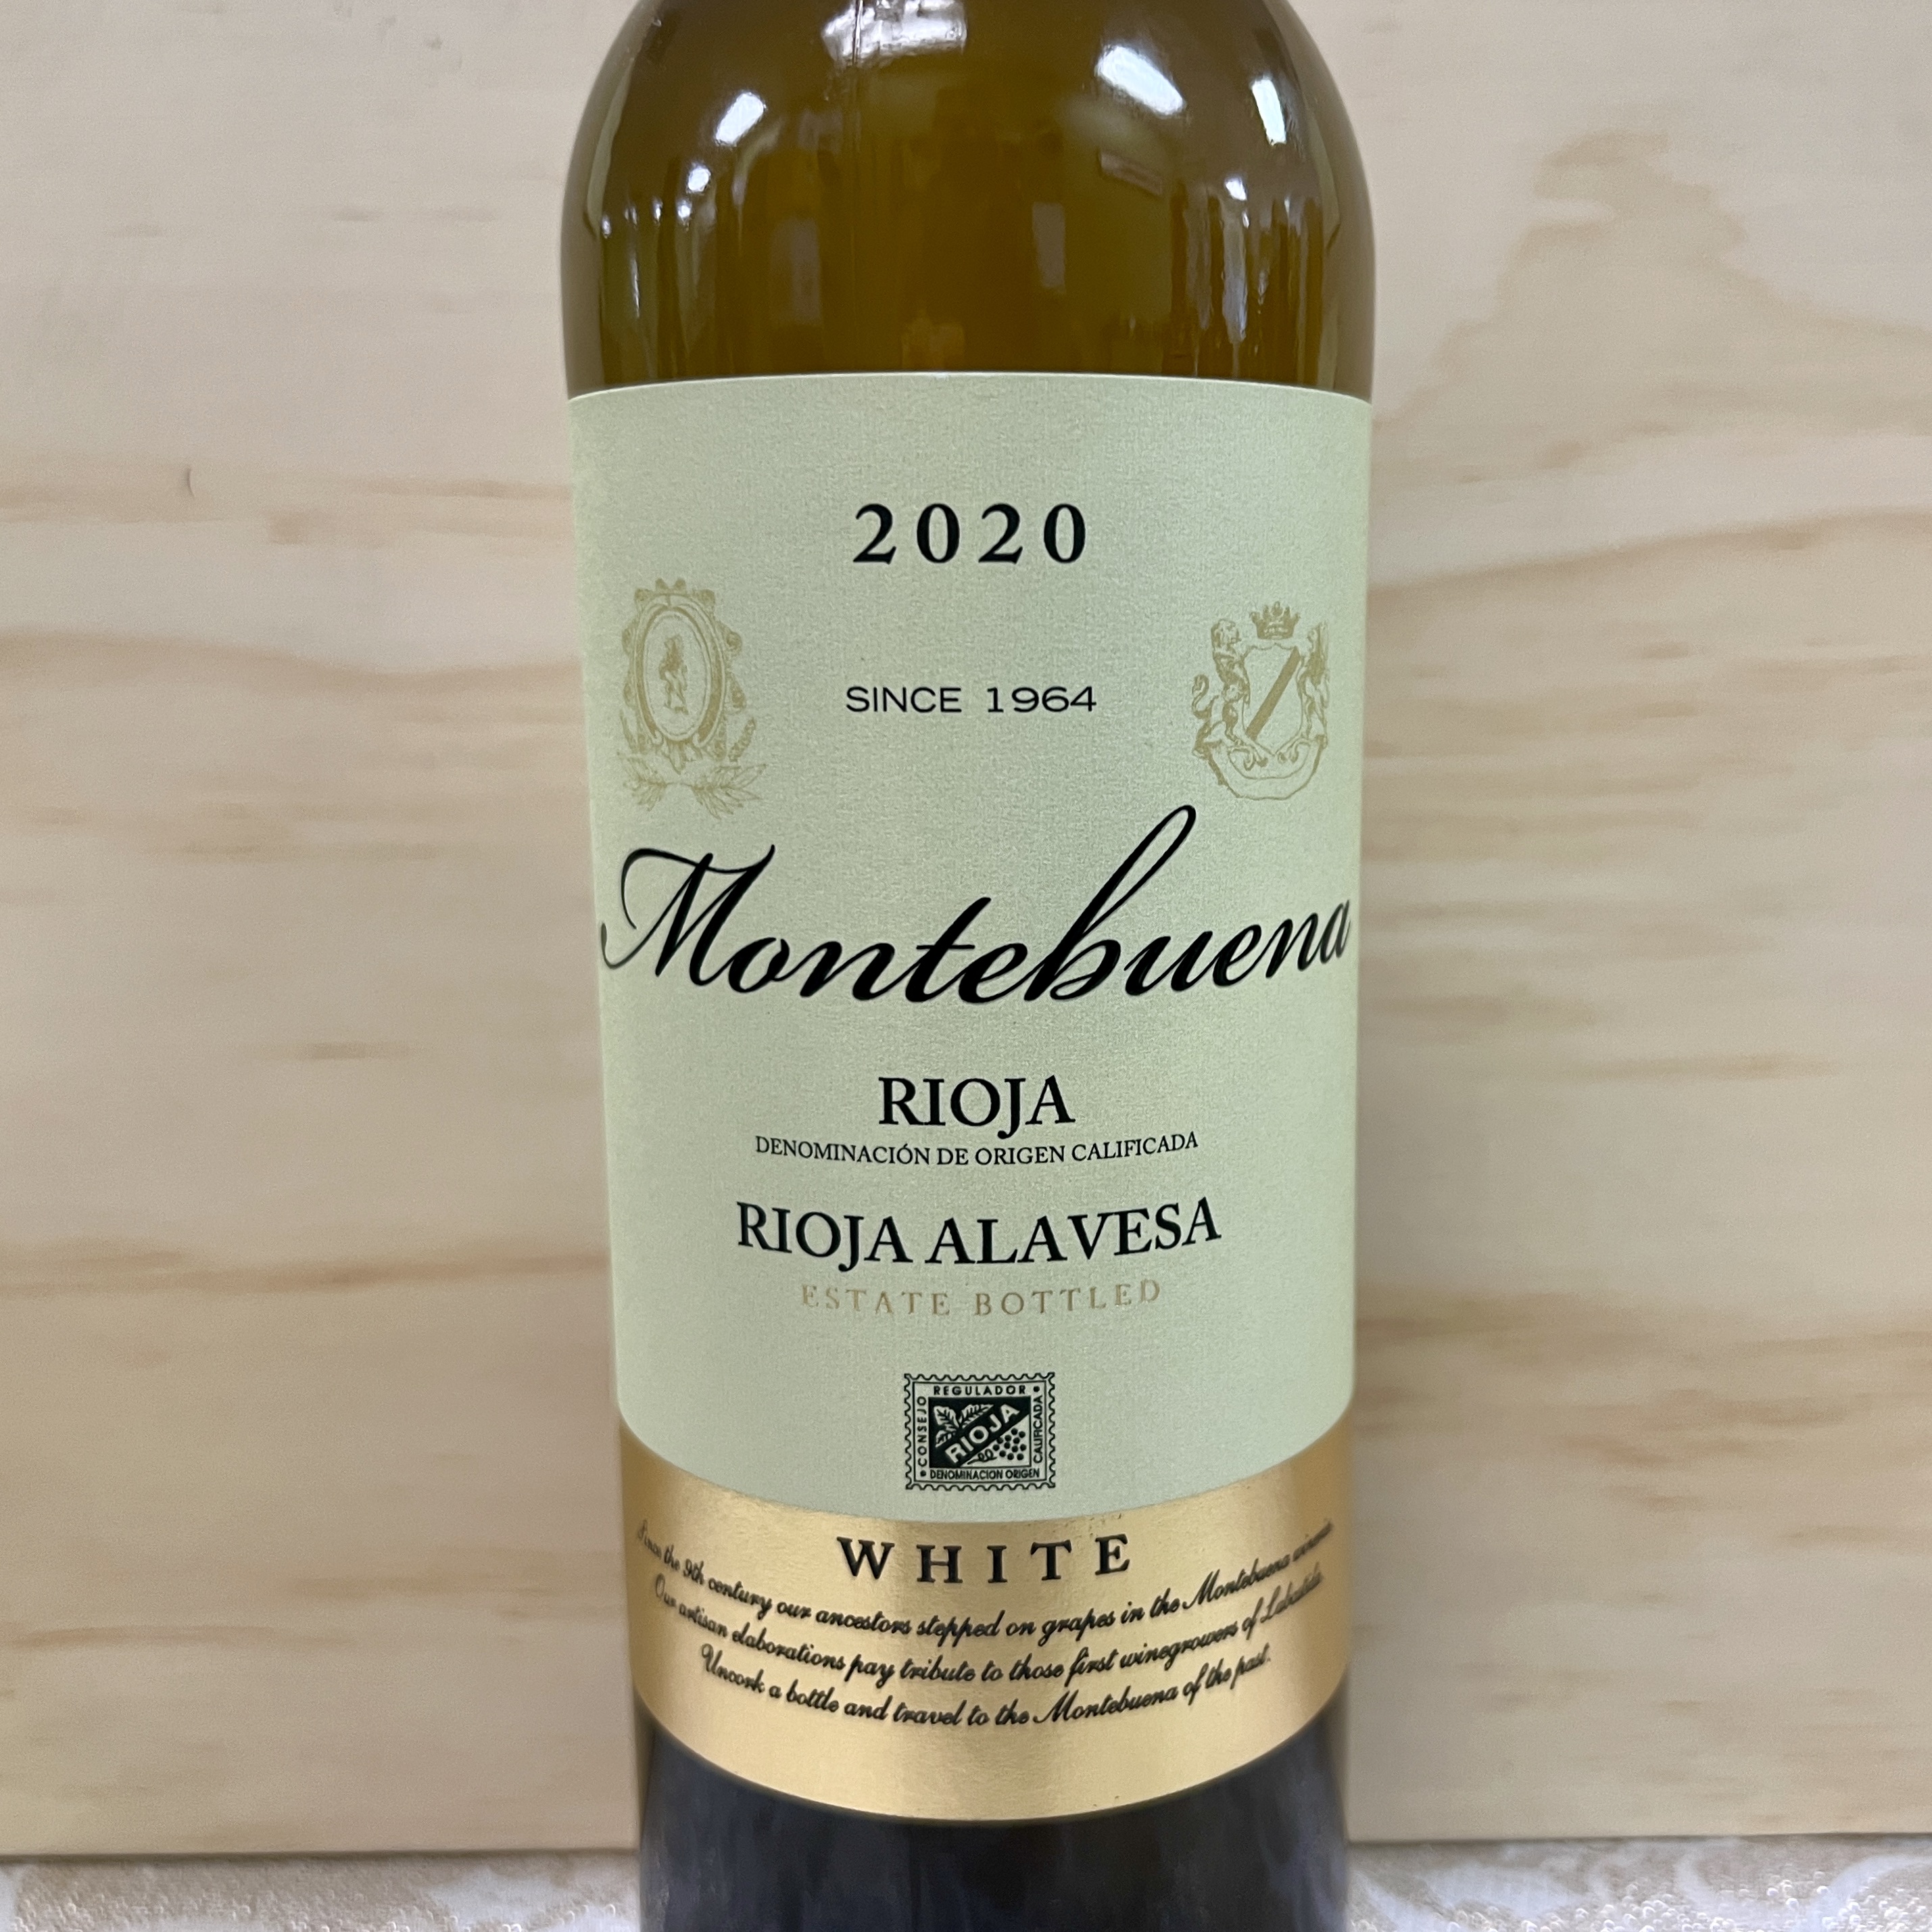 Montebuena Rioja White Rioja Alvavesa 2020